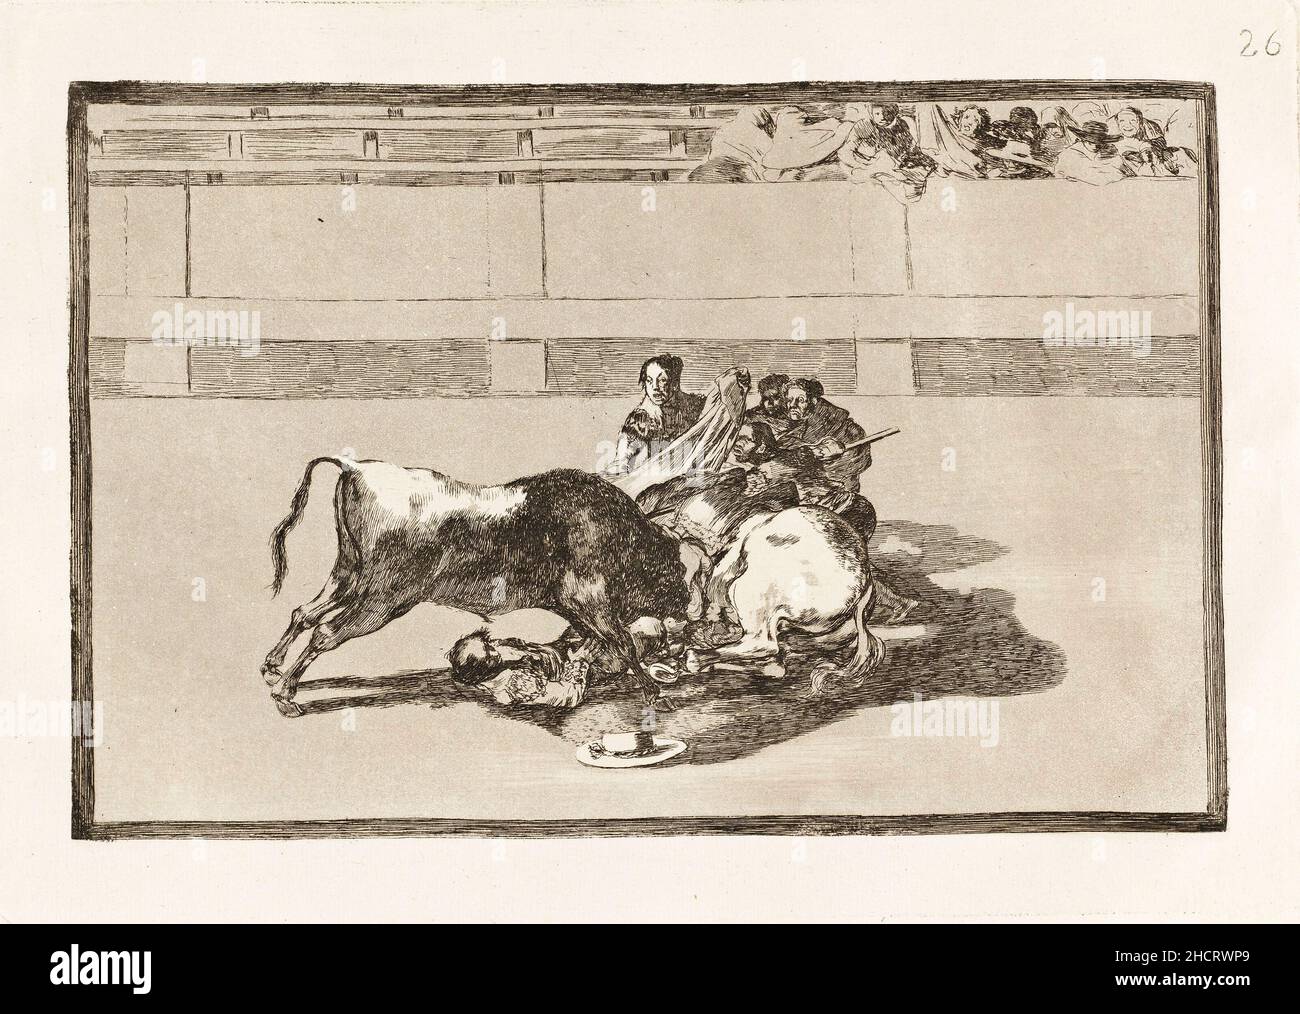 Francisco de Goya, Caida de un picador de su caballo debajo del toro (Un Picador est Unhorsed et des chutes sous le Bull). Il s'agit du numéro d'impression 26 dans une série imprimée 33 sur la corrida. Banque D'Images